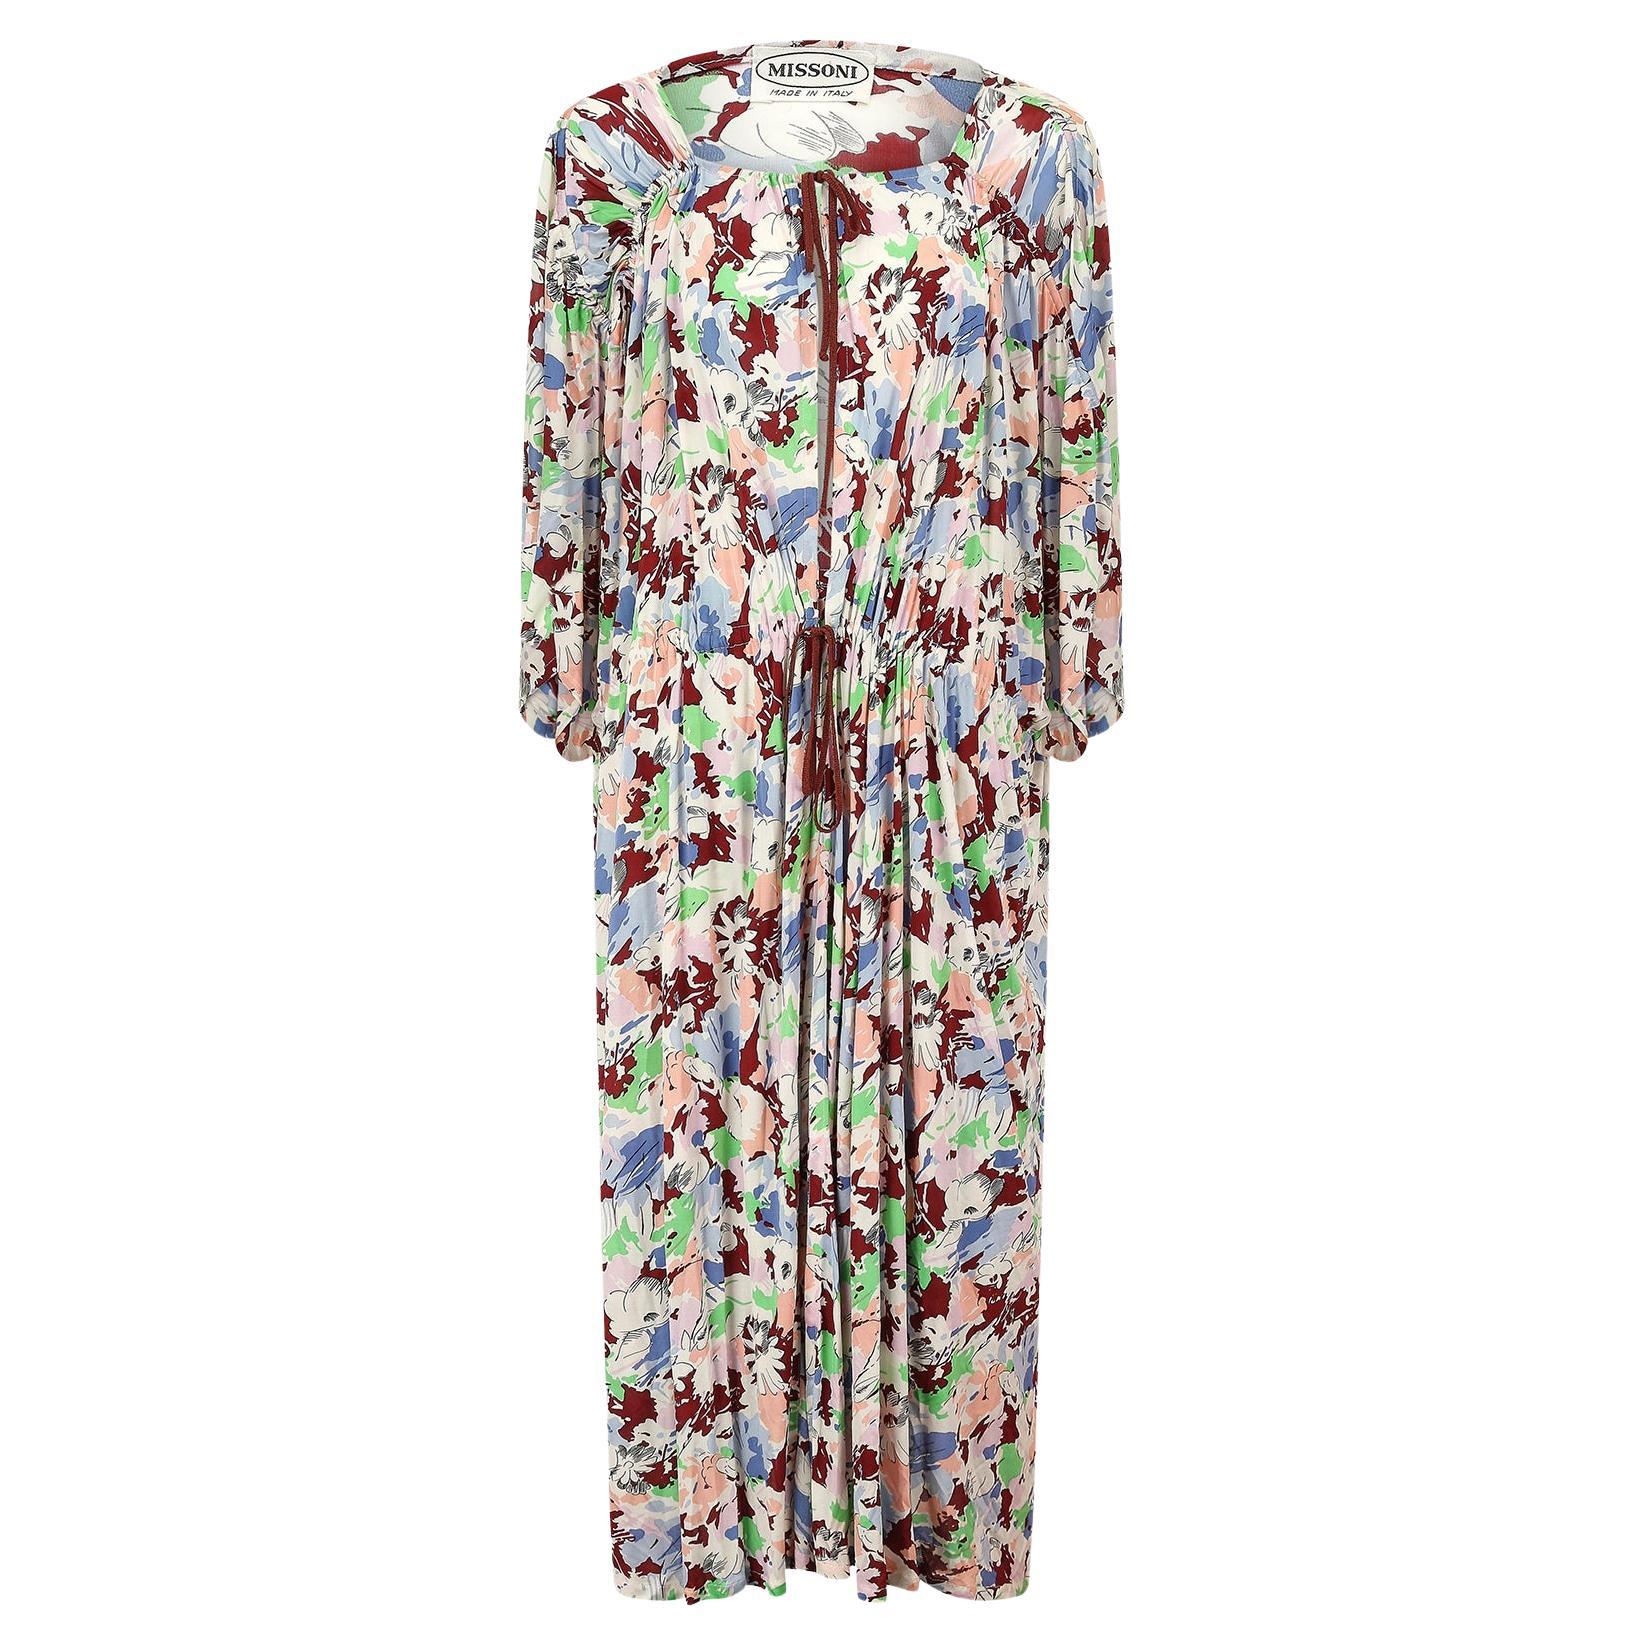 1980s Missoni Floral Silk Jersey Dress Suit For Sale